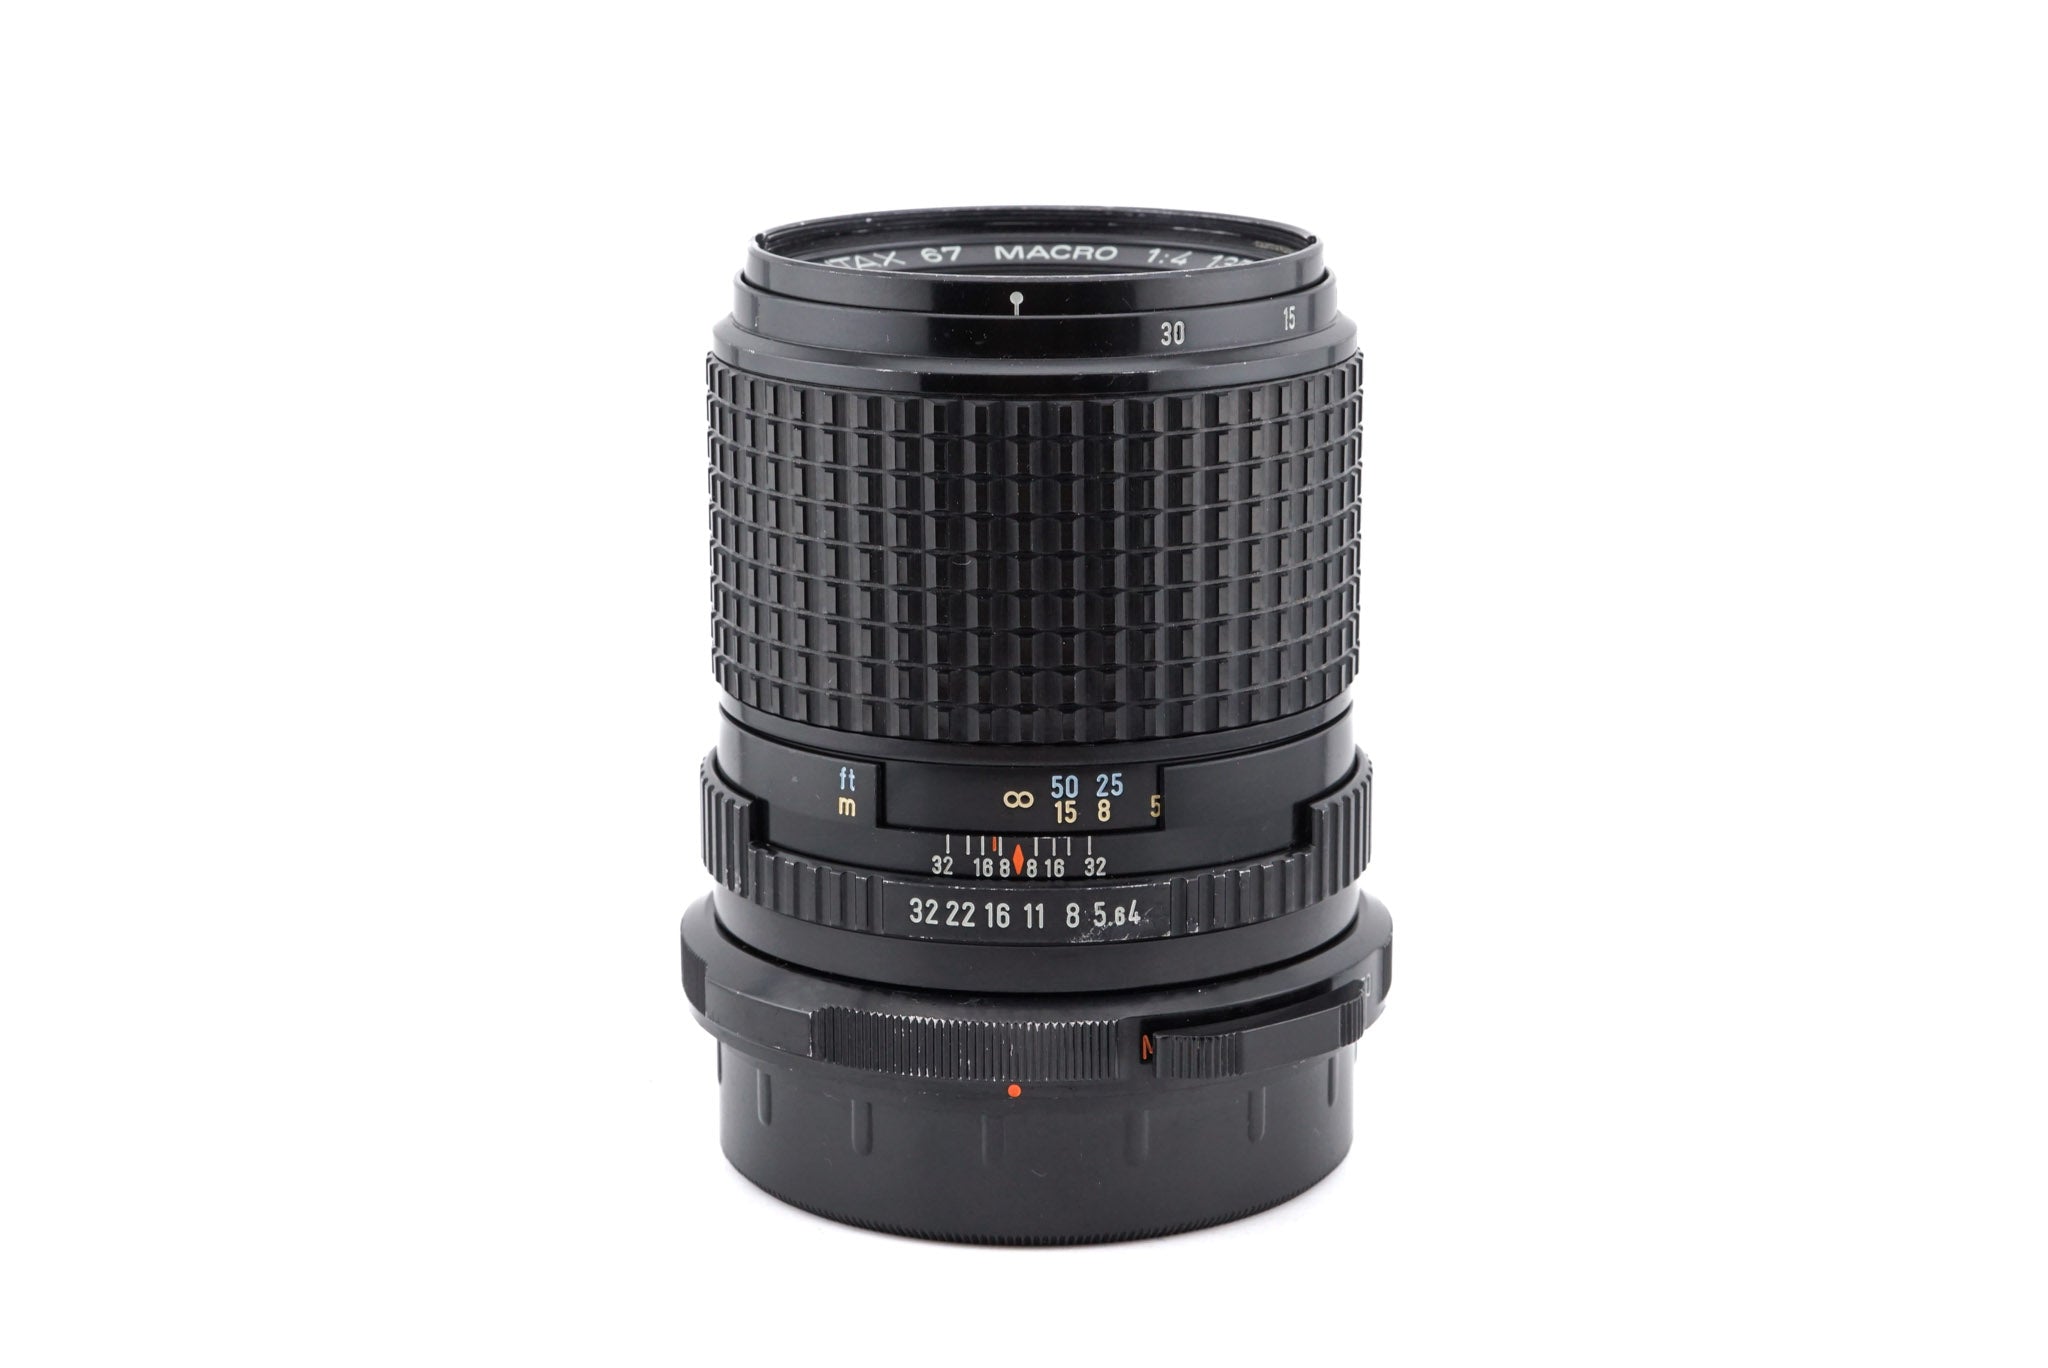 Pentax 135mm f4 SMC 67 Macro - Lens